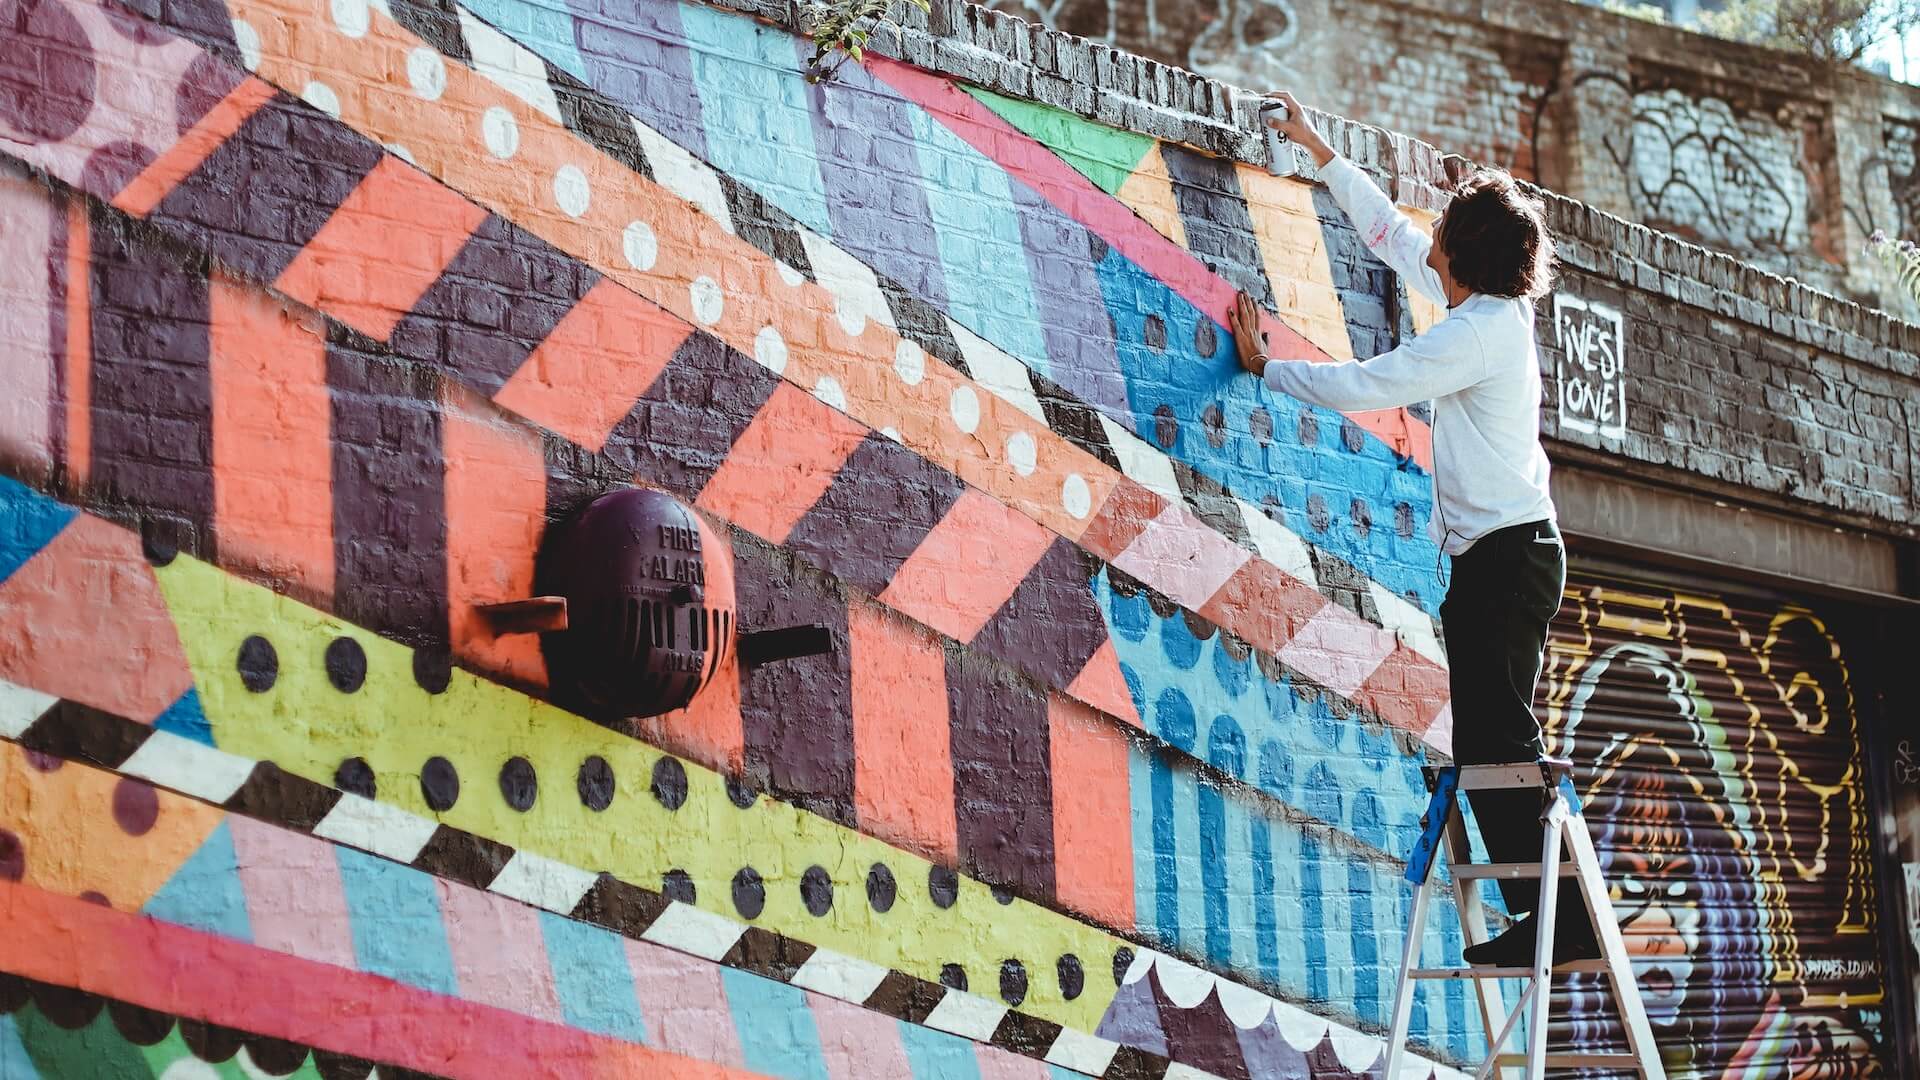 Brick Lane street artist painting